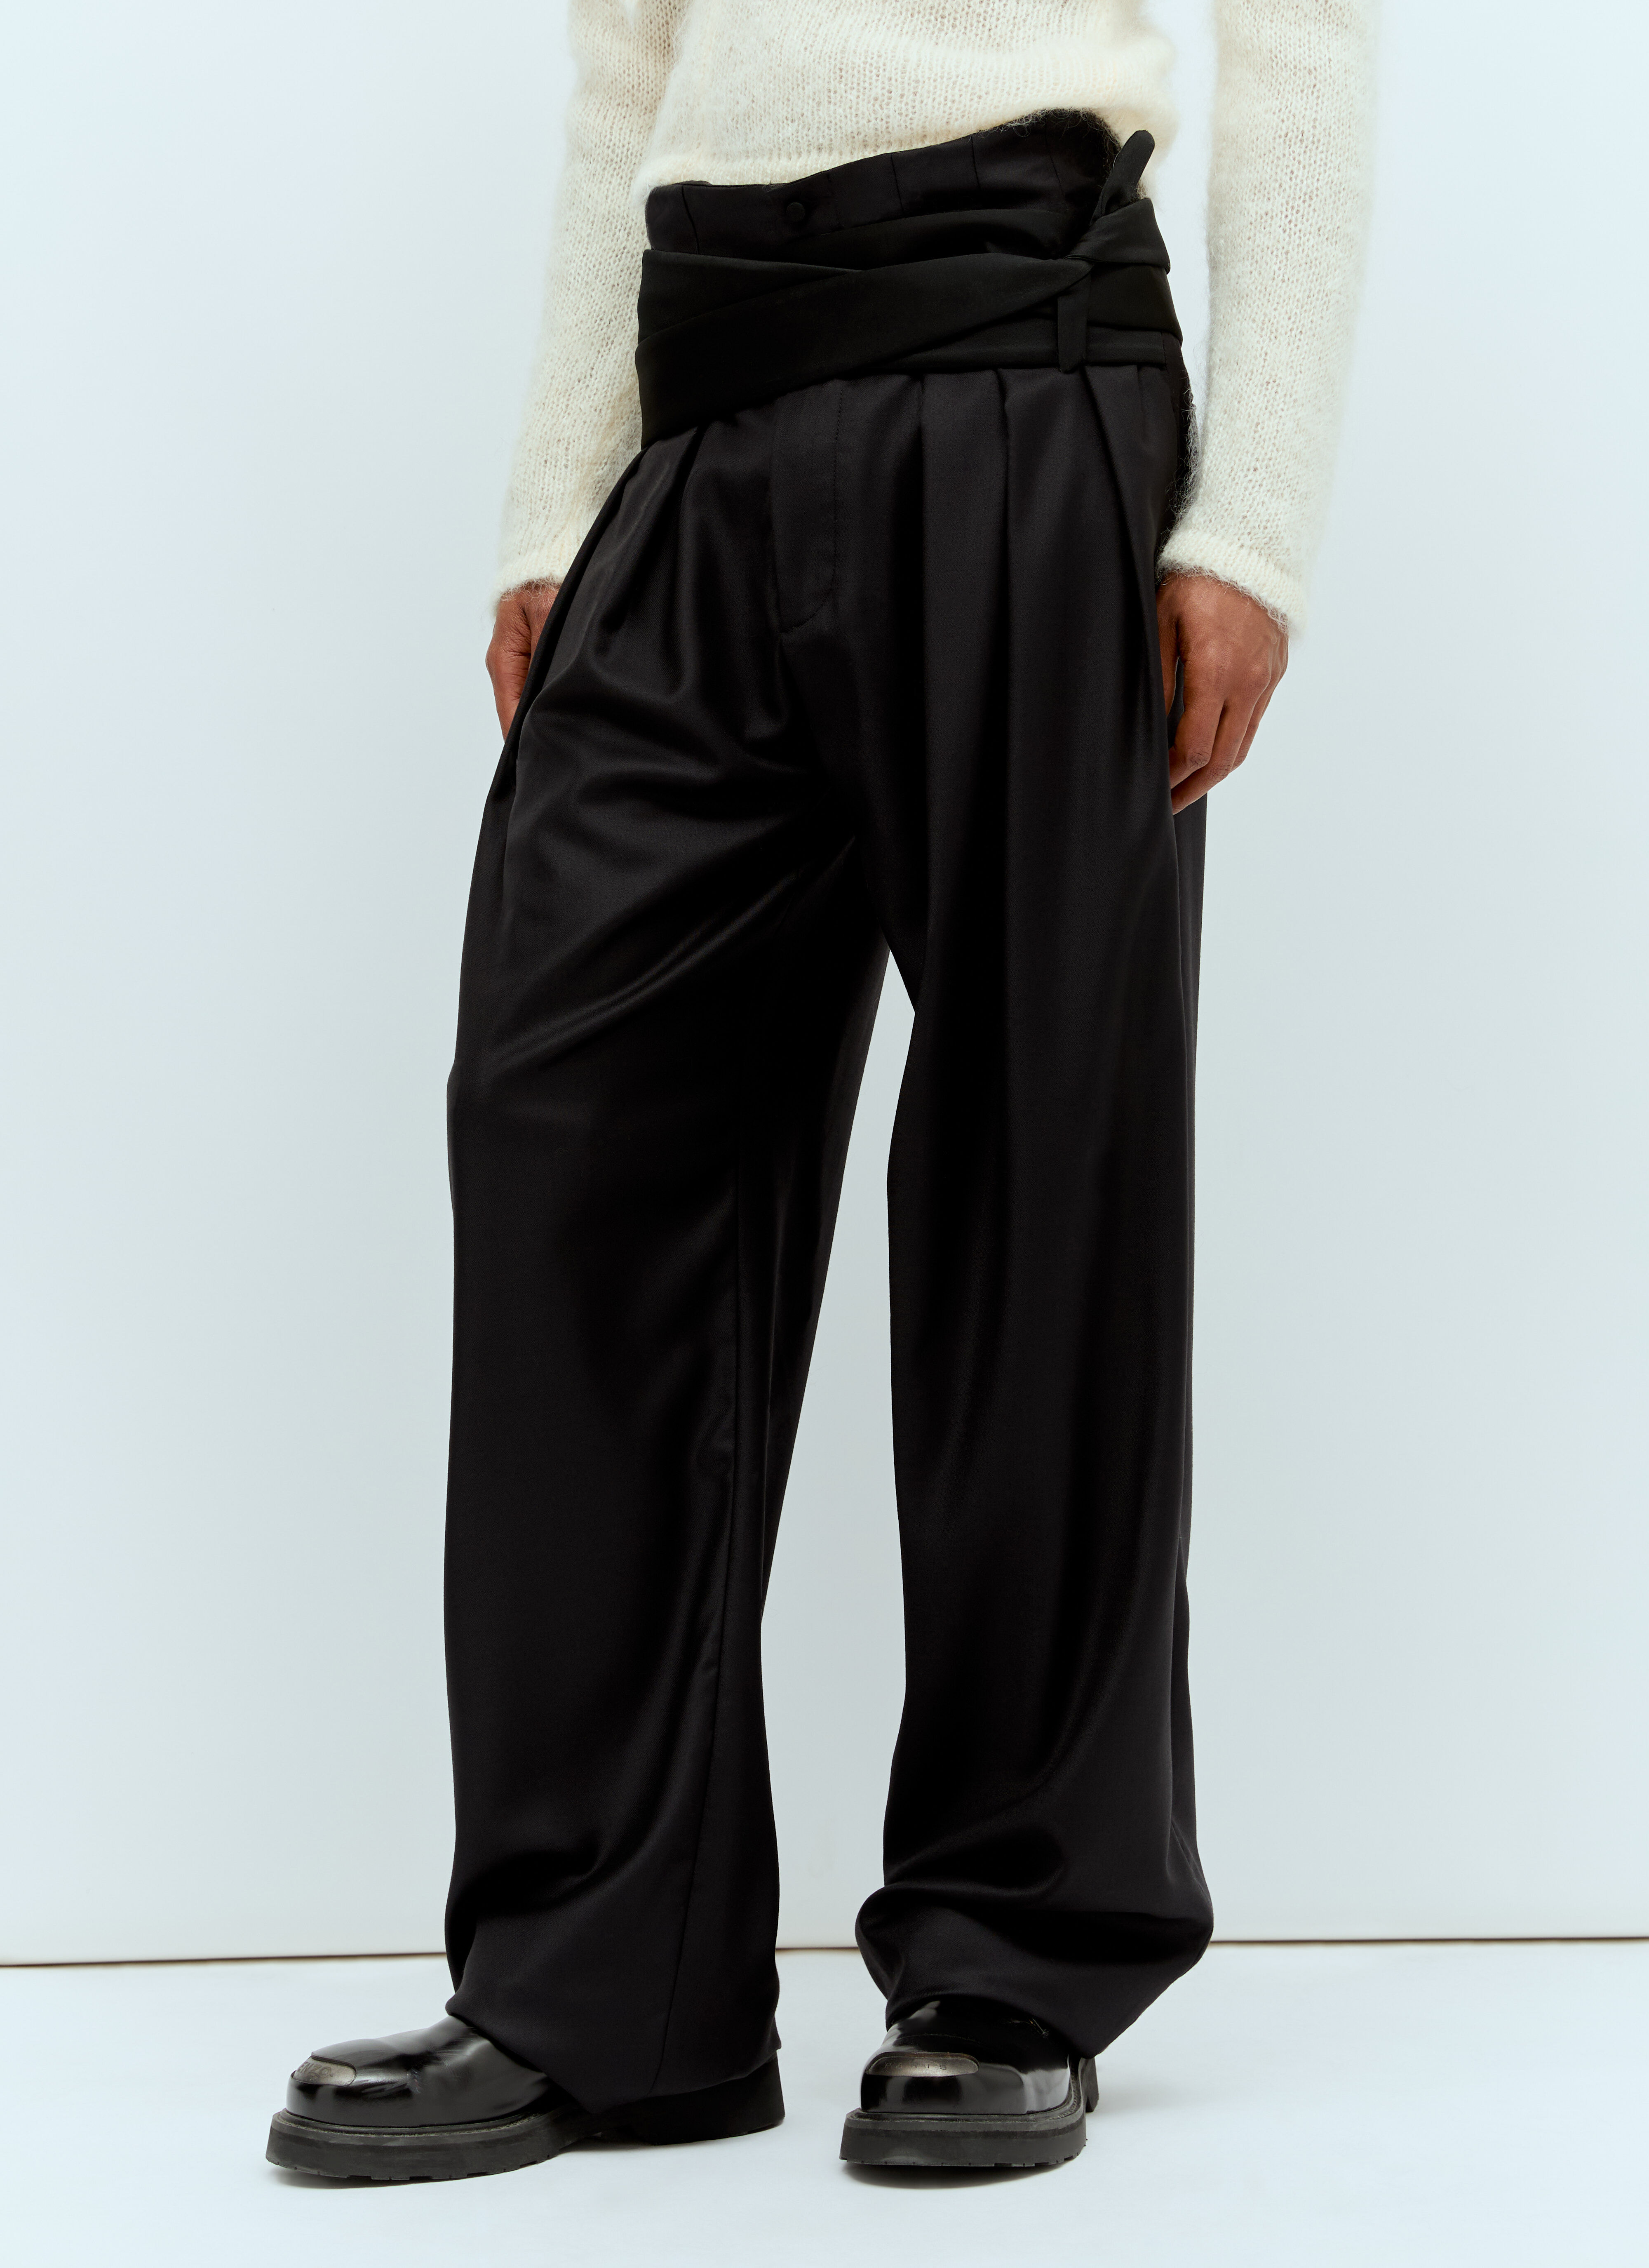 Yohji Yamamoto Pleated Pants With Silk Ties Black yoy0156005